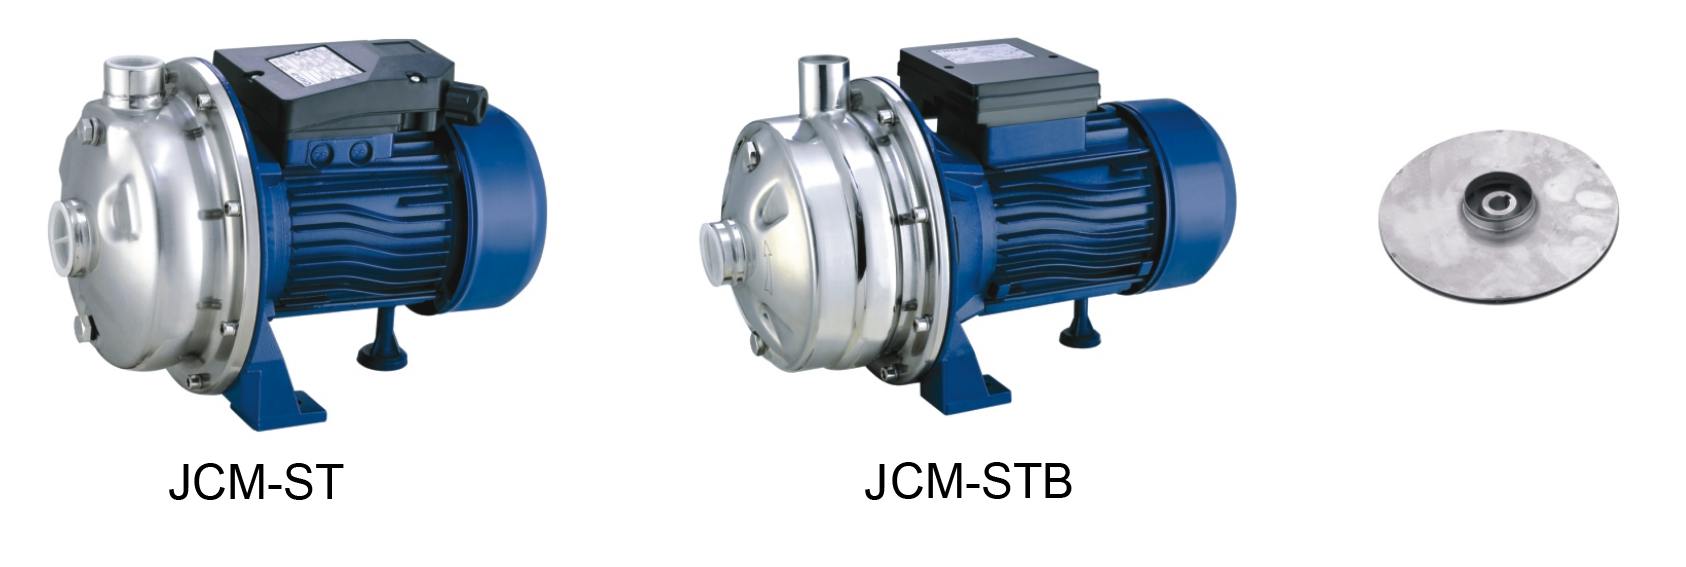 JCM-ST Centrifugal Pump